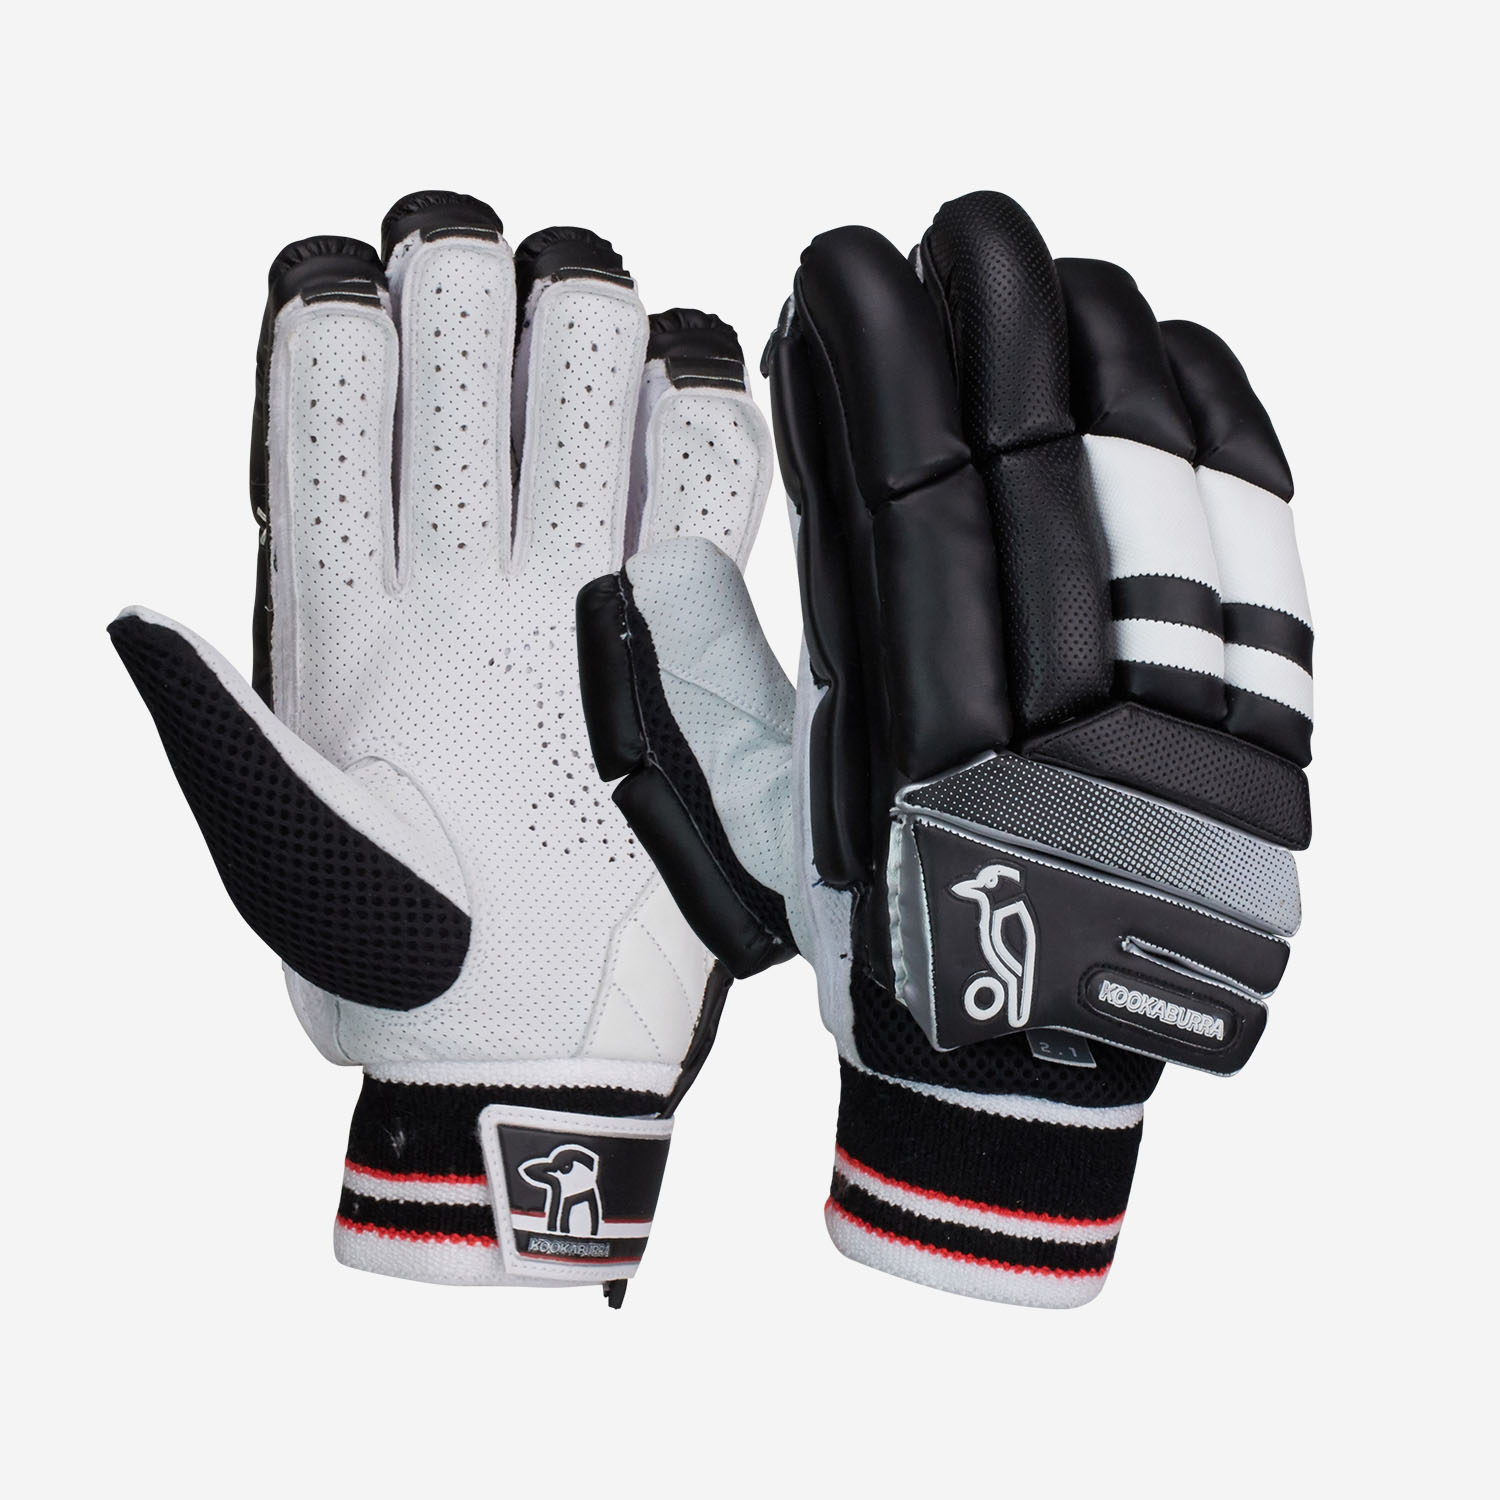 T20 Black Coloured Batting Gloves